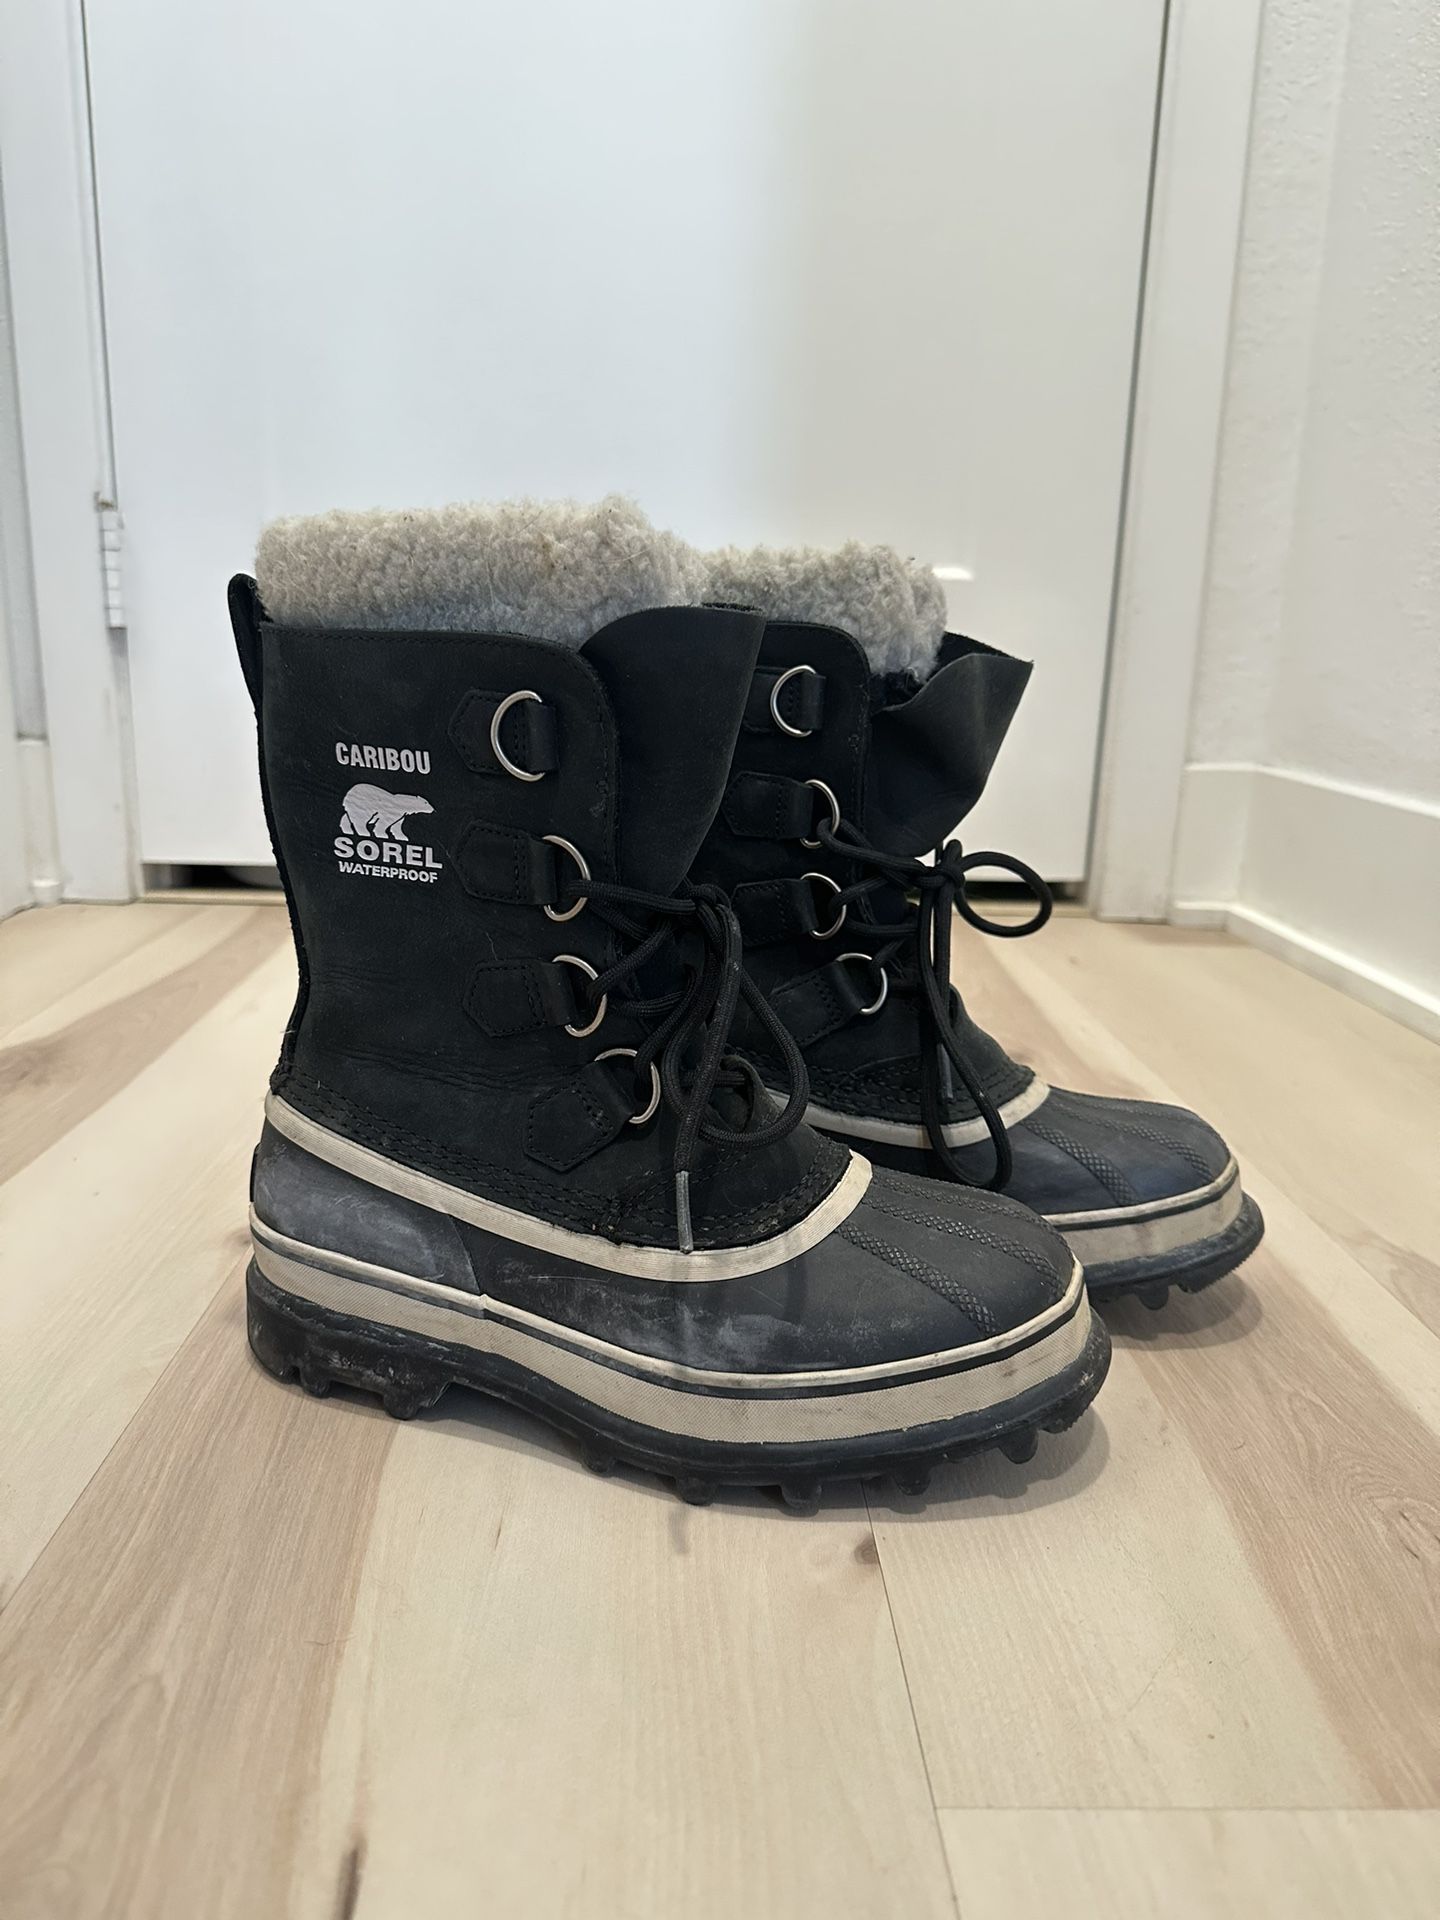 Sorel Caribou Winter Boot Women’s 7